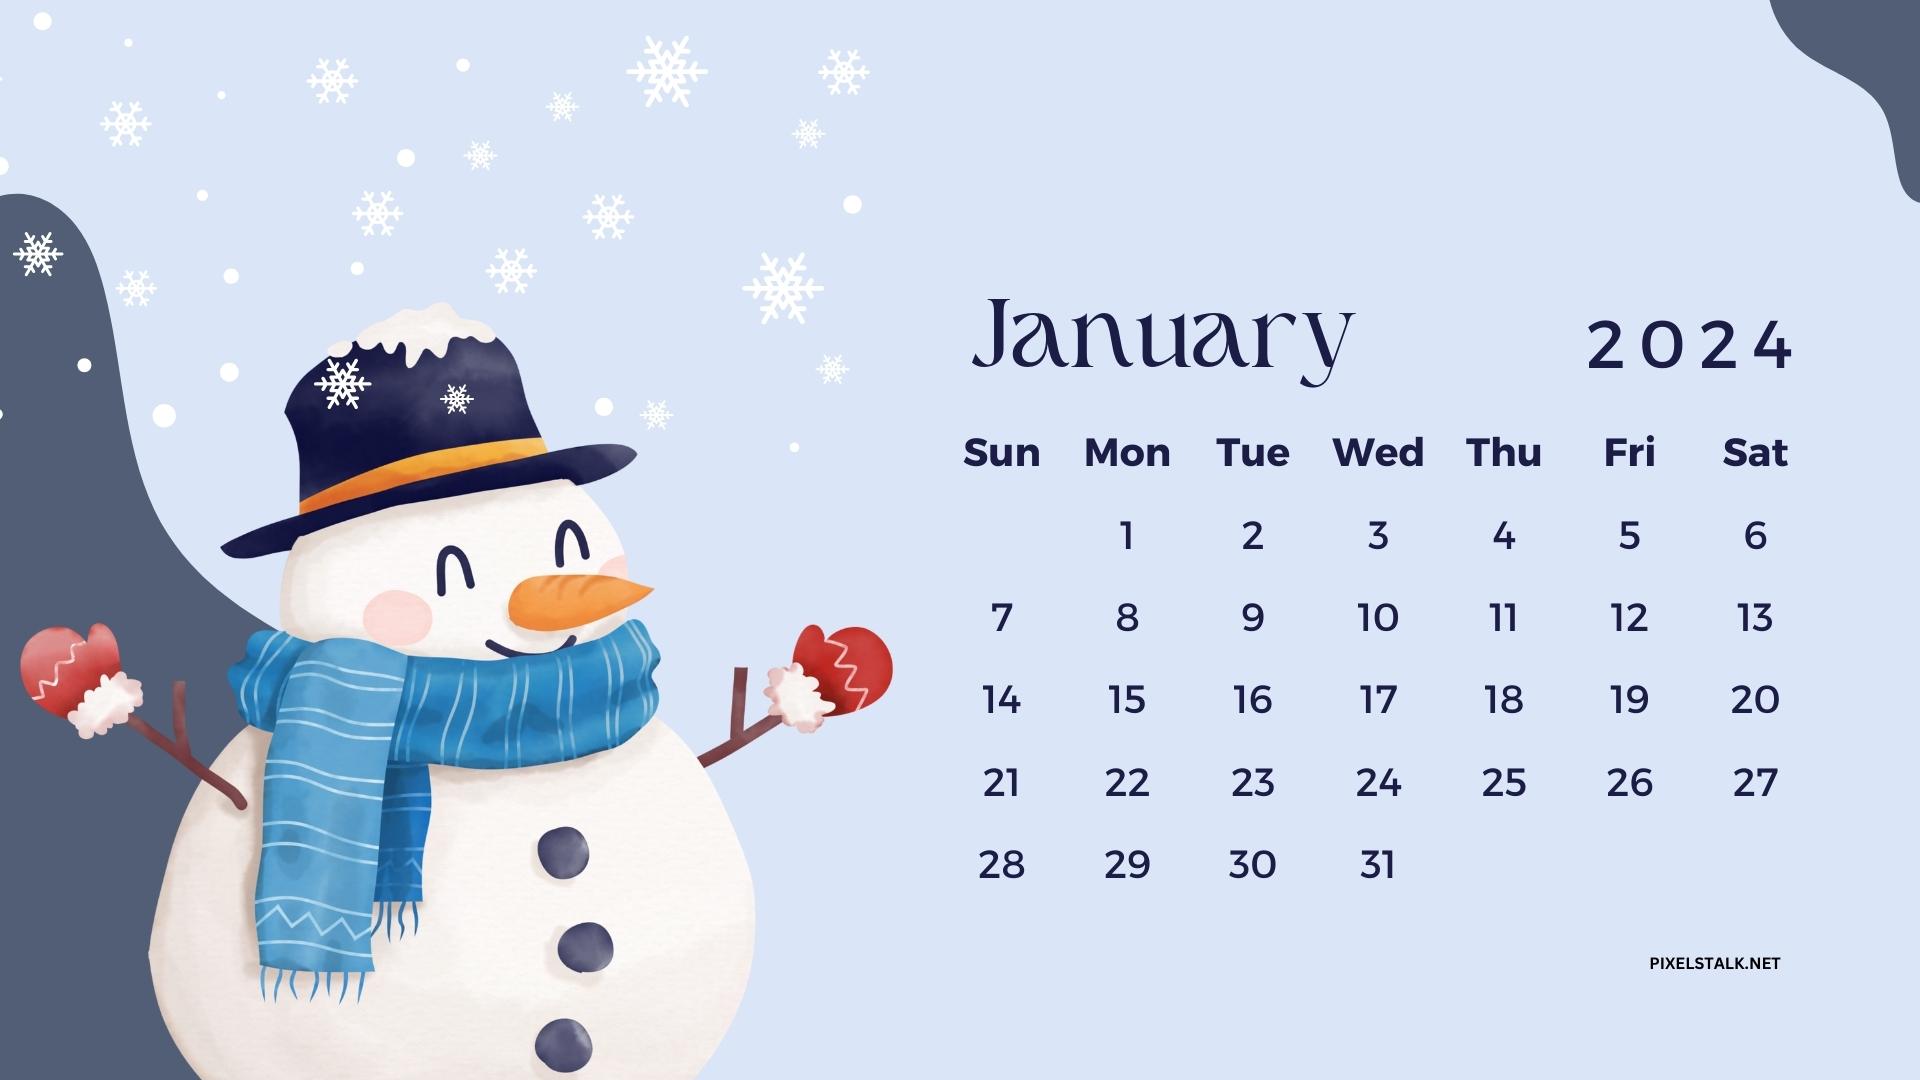 January 2024 Calendar Background For Desktop Pixelstalknet